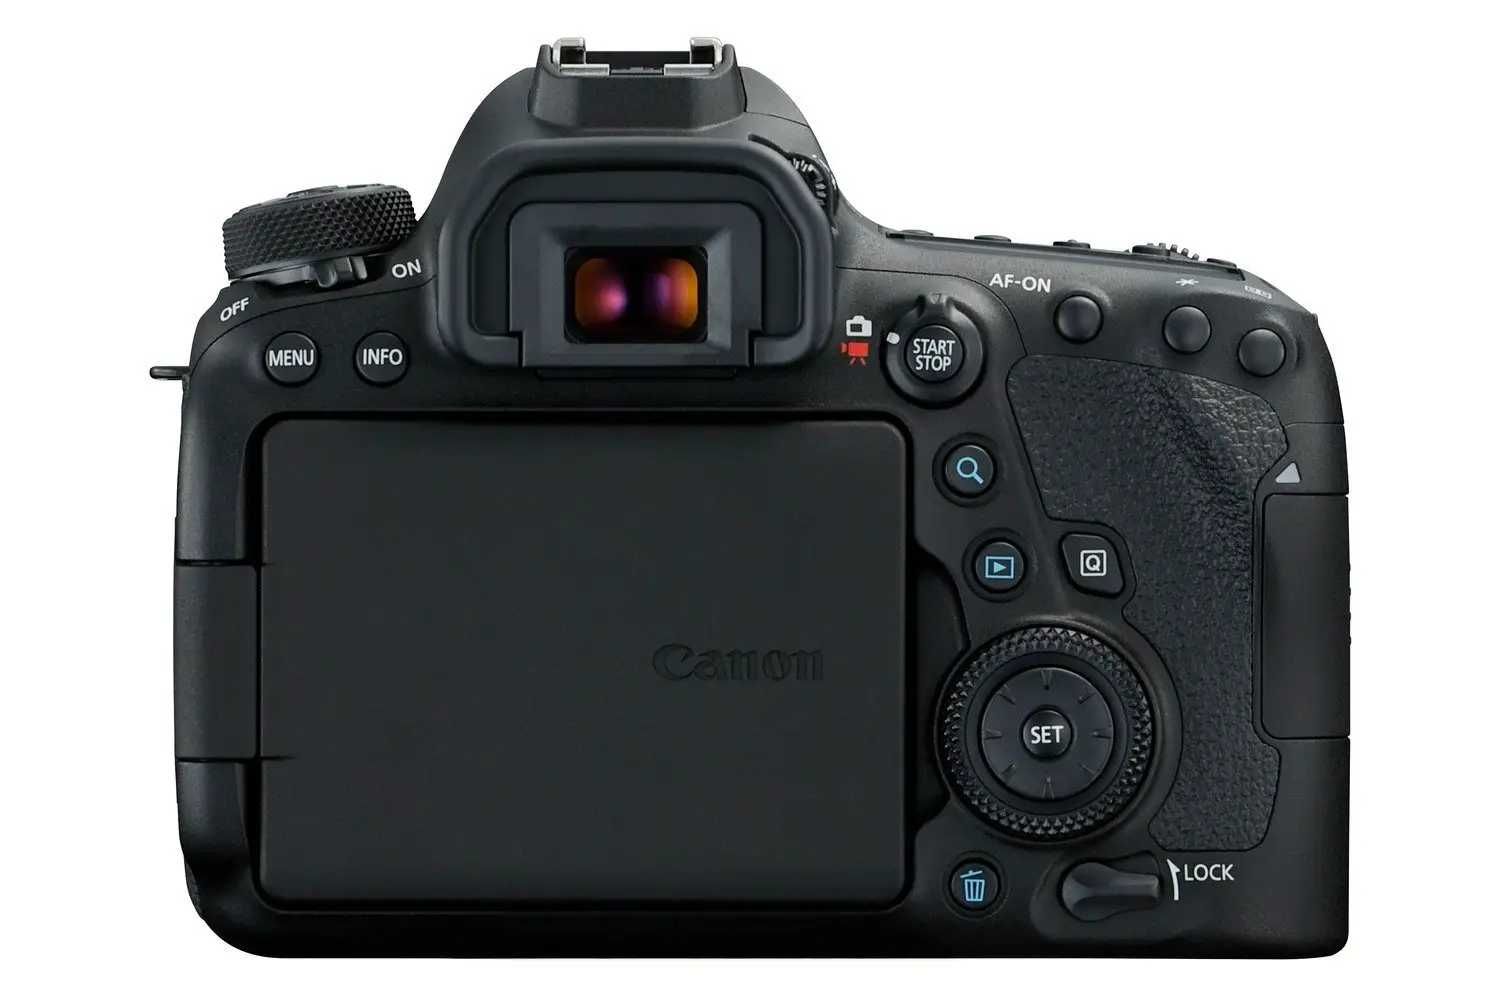 Canon EOS 6D Mark II Body